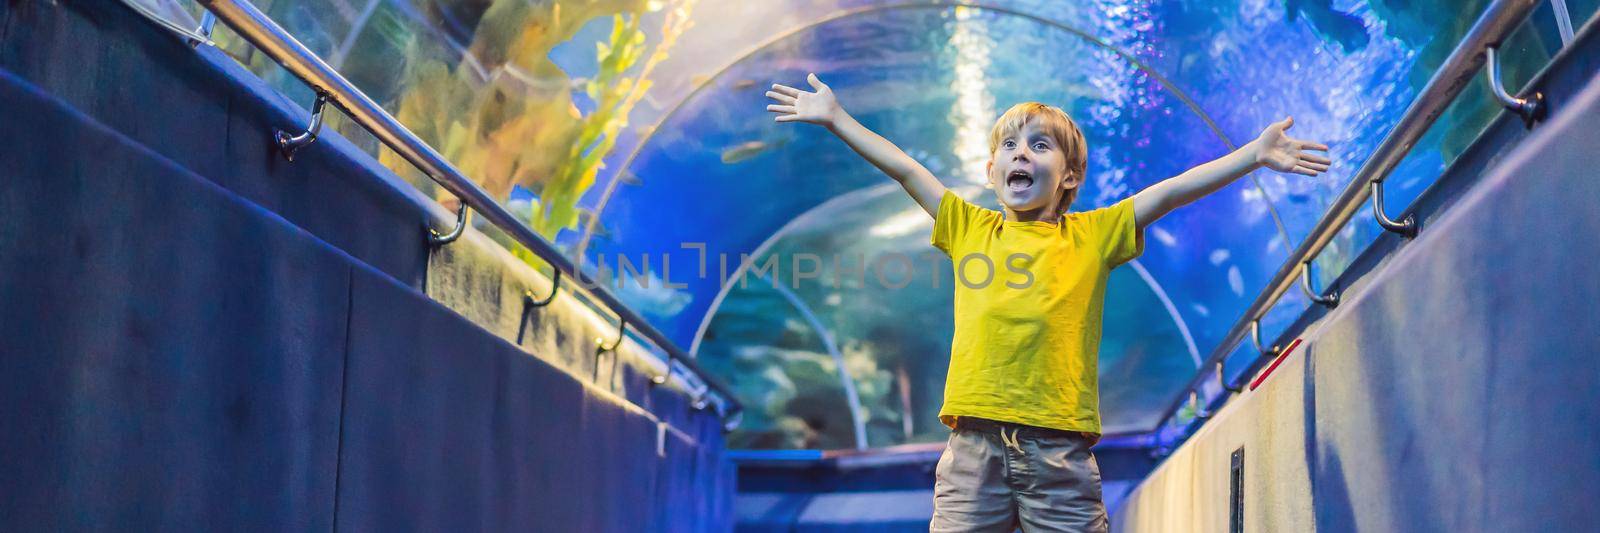 aquarium and boy, visit in oceanarium, underwater tunnel and kid, wildlife underwater indoor, nature aquatic, fish, tortoise BANNER, LONG FORMAT by galitskaya